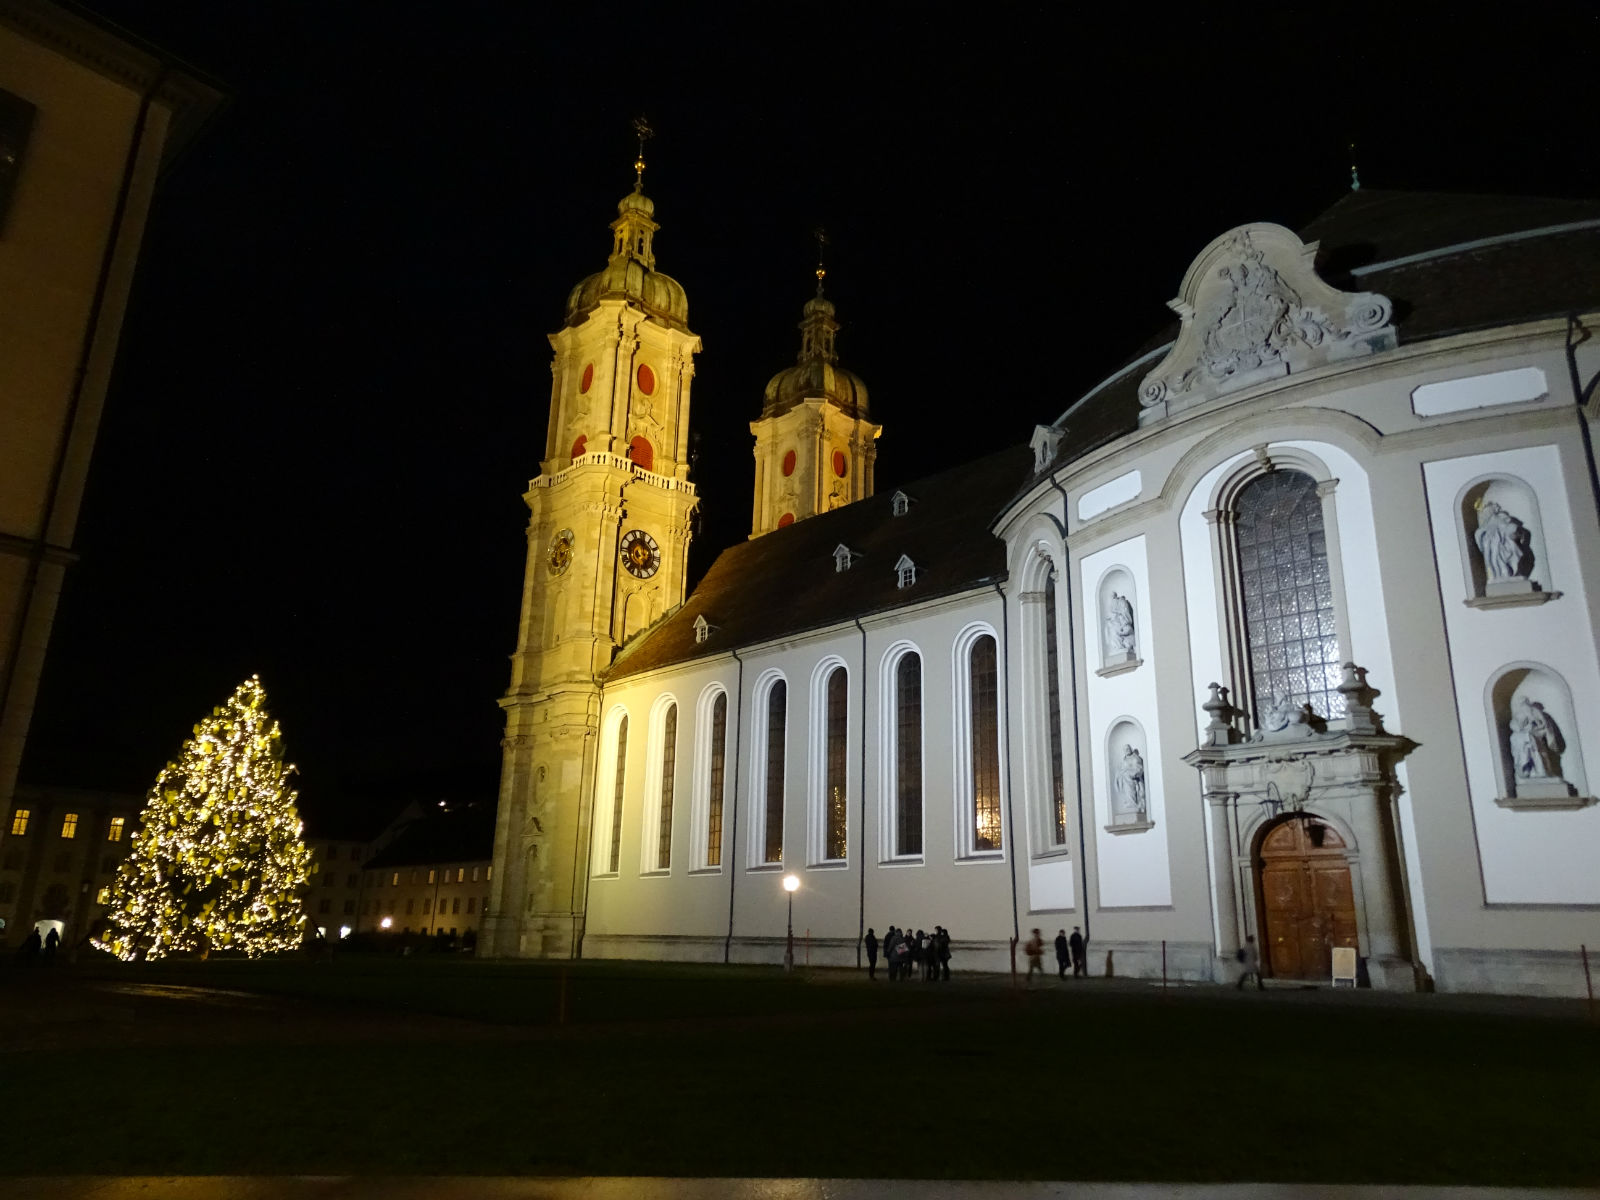 Collegiate Church St. Gallen